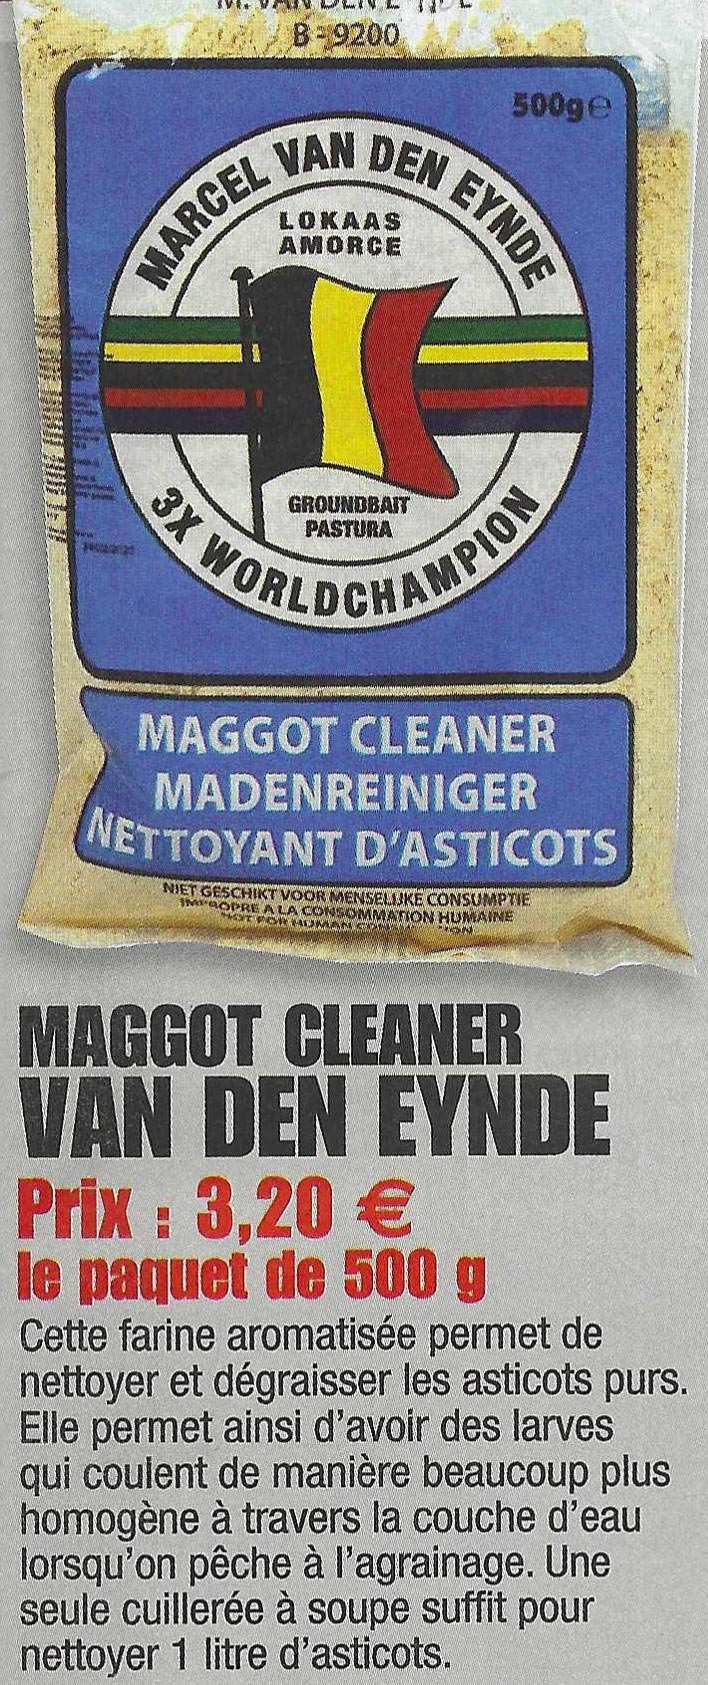 Maggot cleaner van den eynde